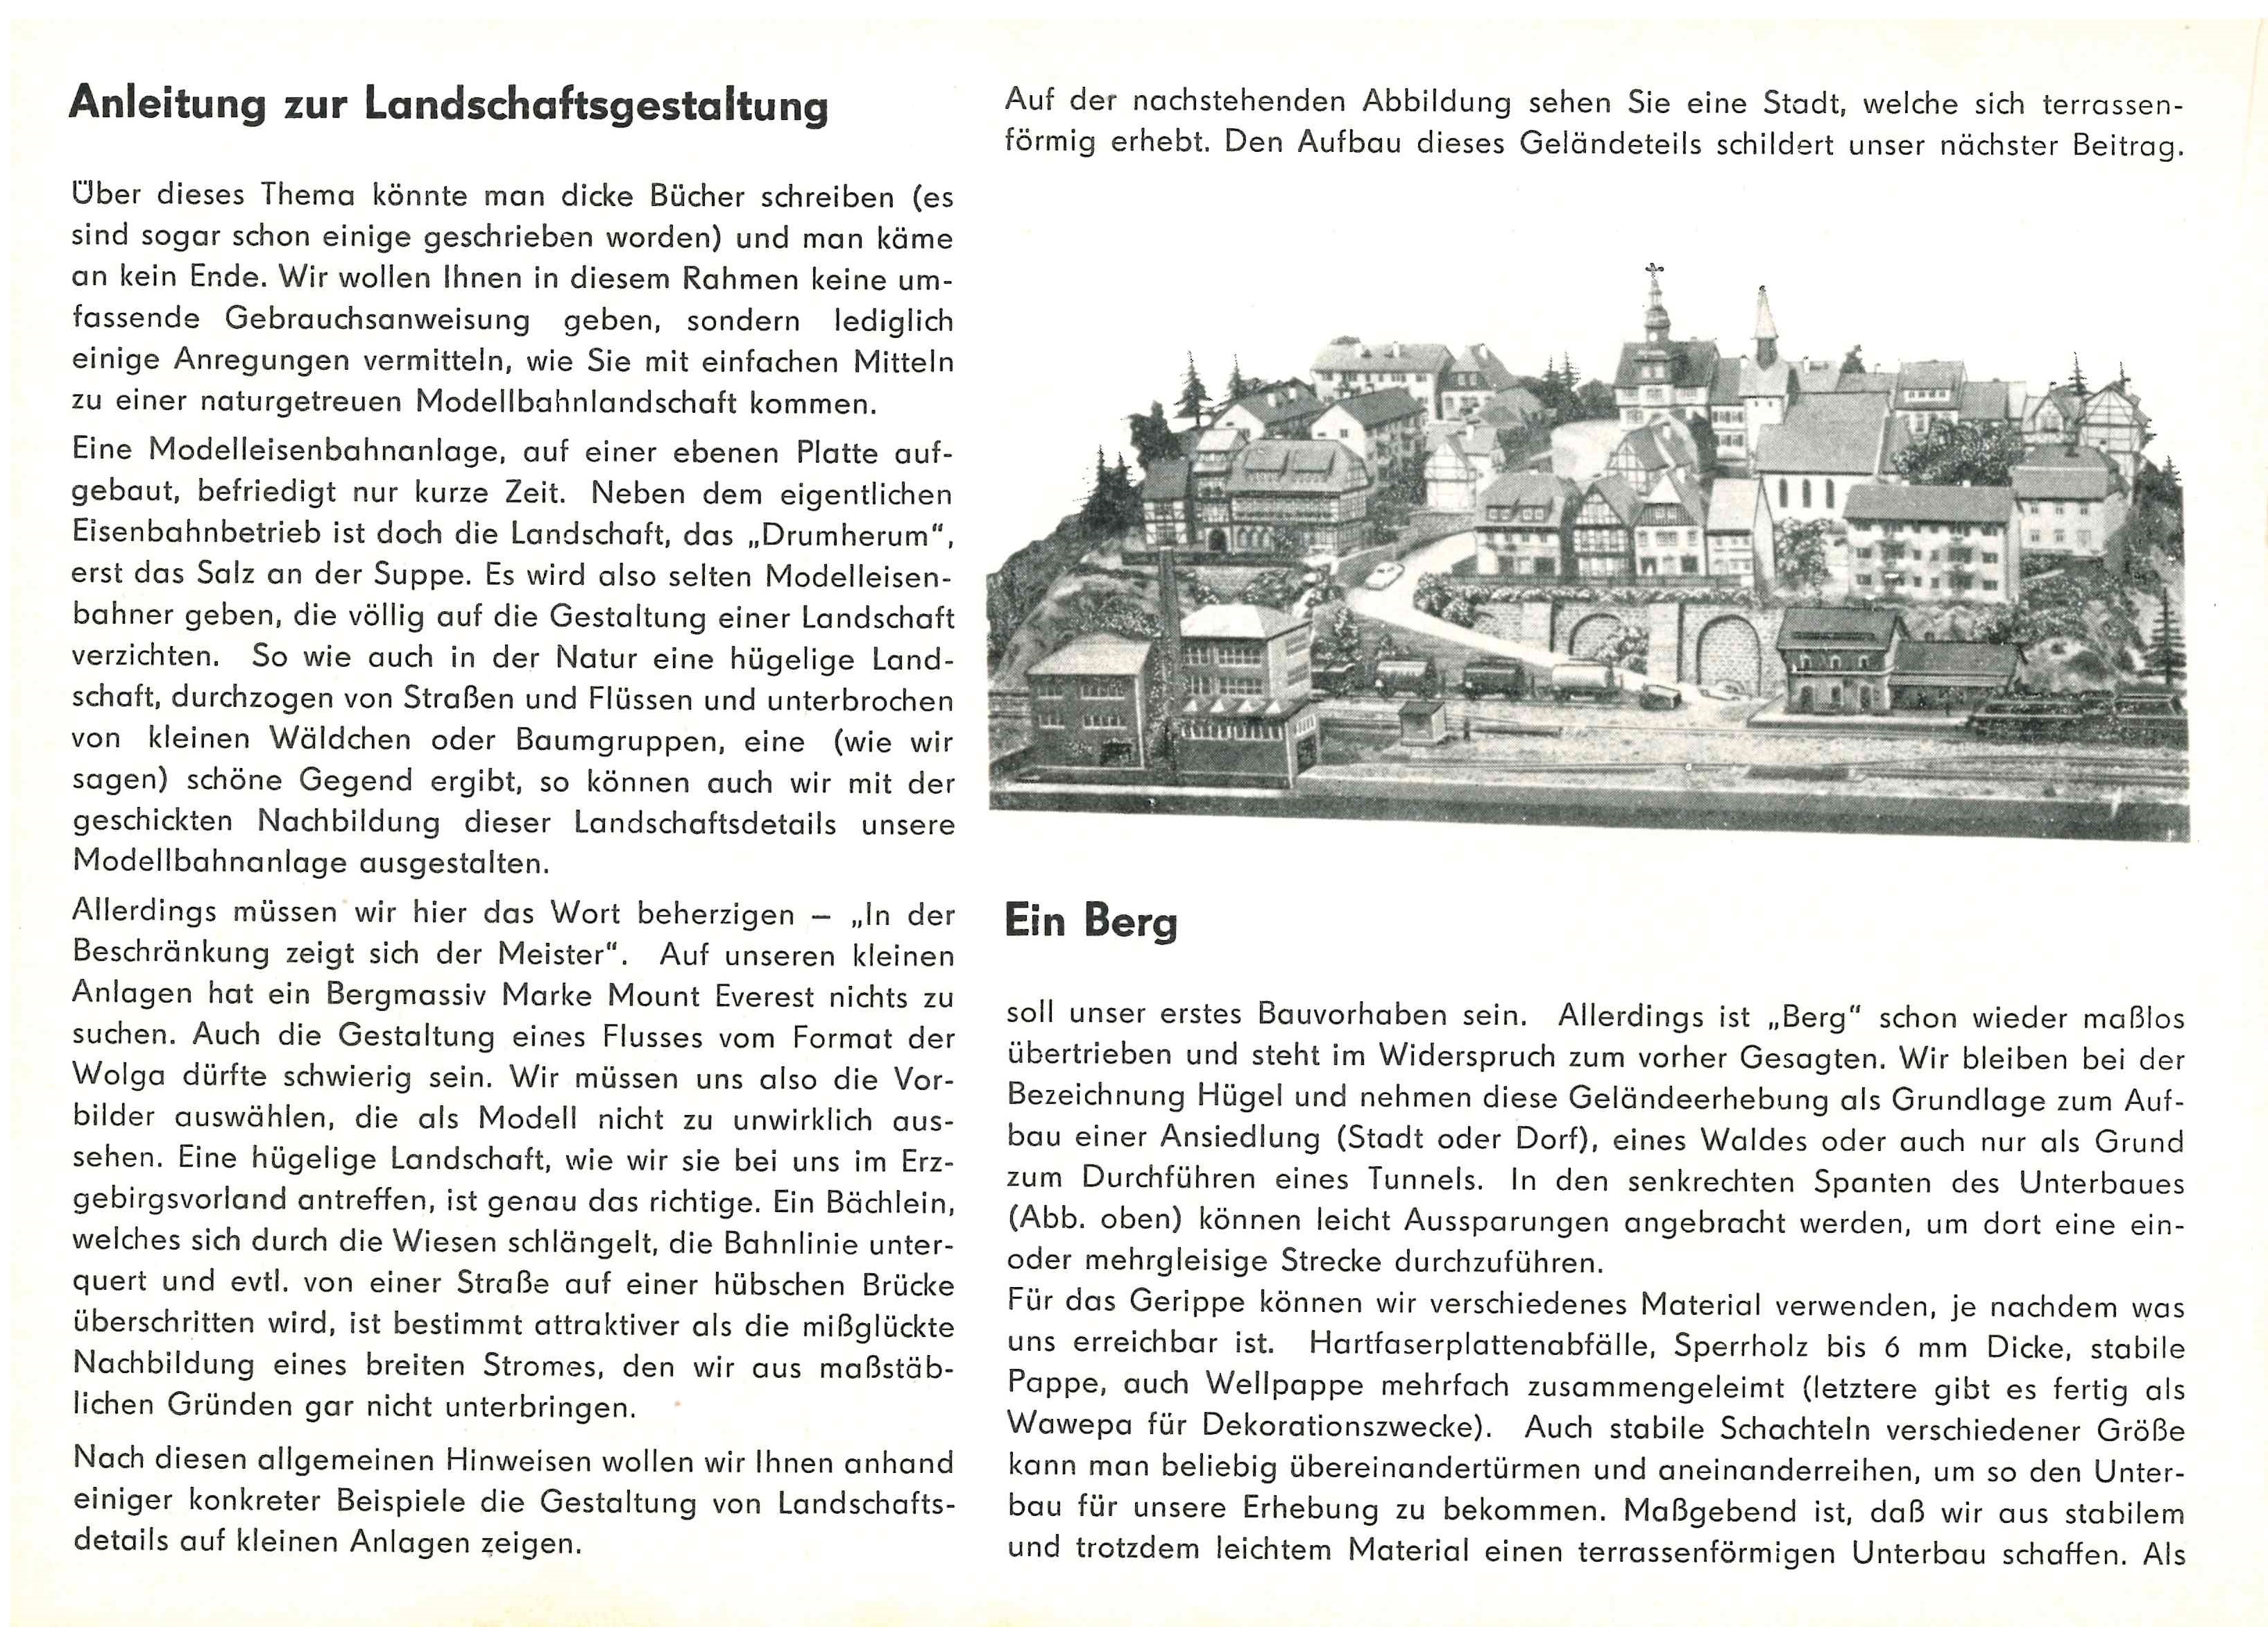 Каталог Auhagen 1970 г., страница 12